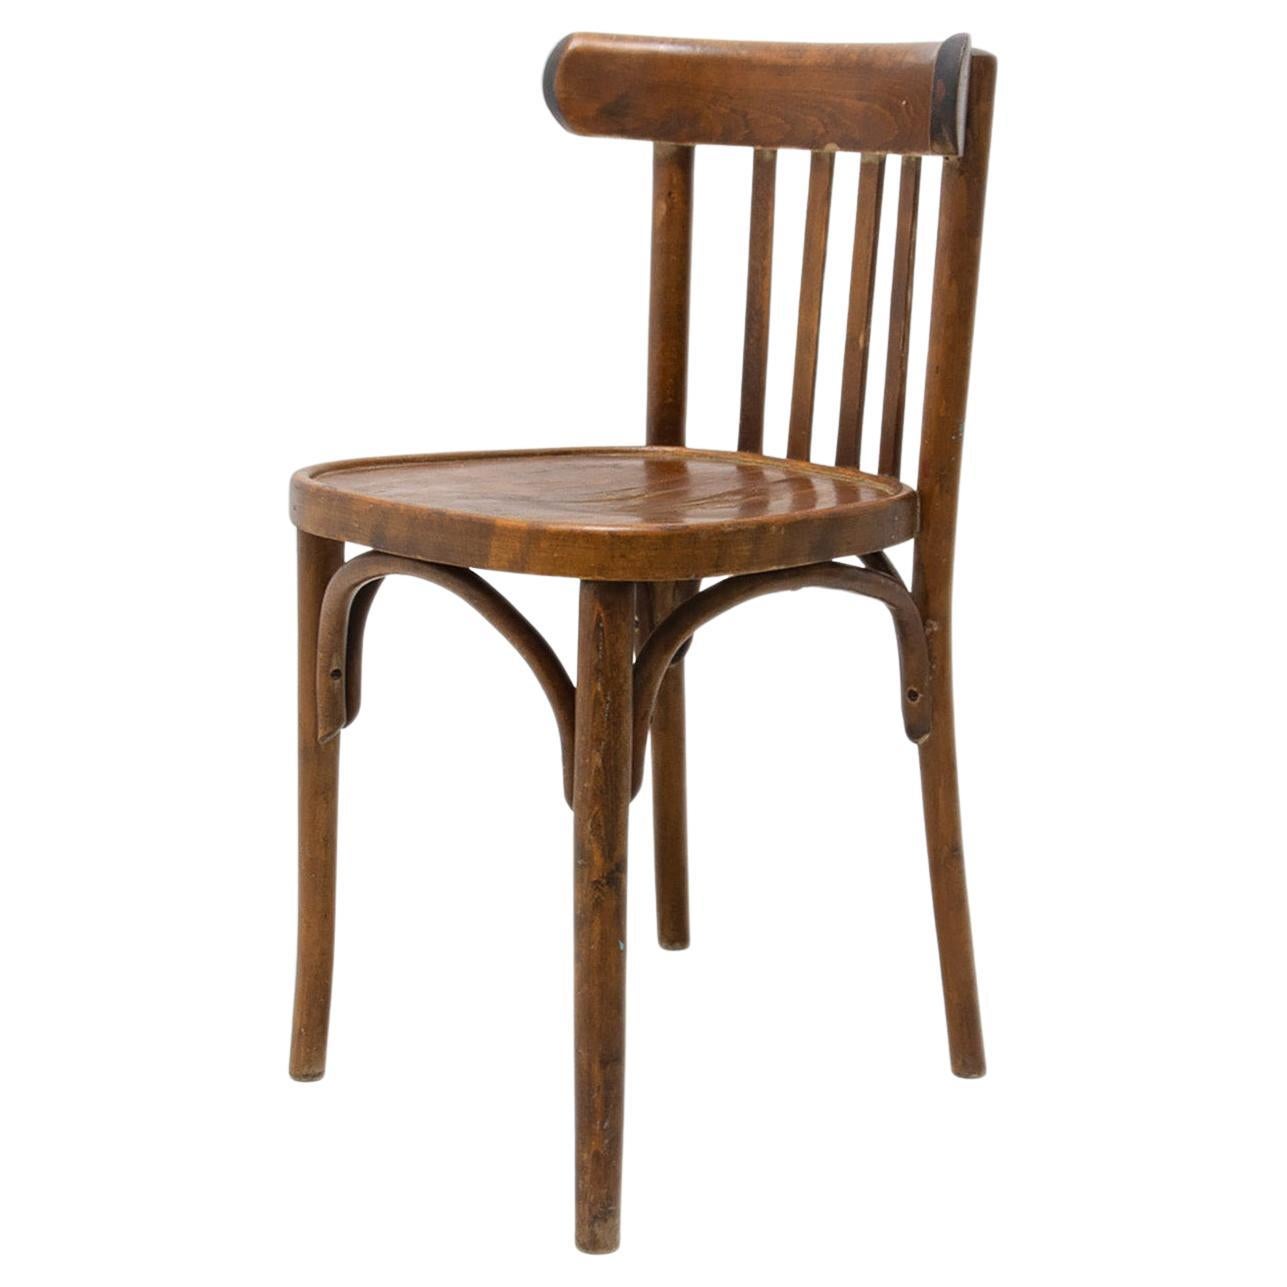 Beech bentwood Chair from Thonet, 1950´s